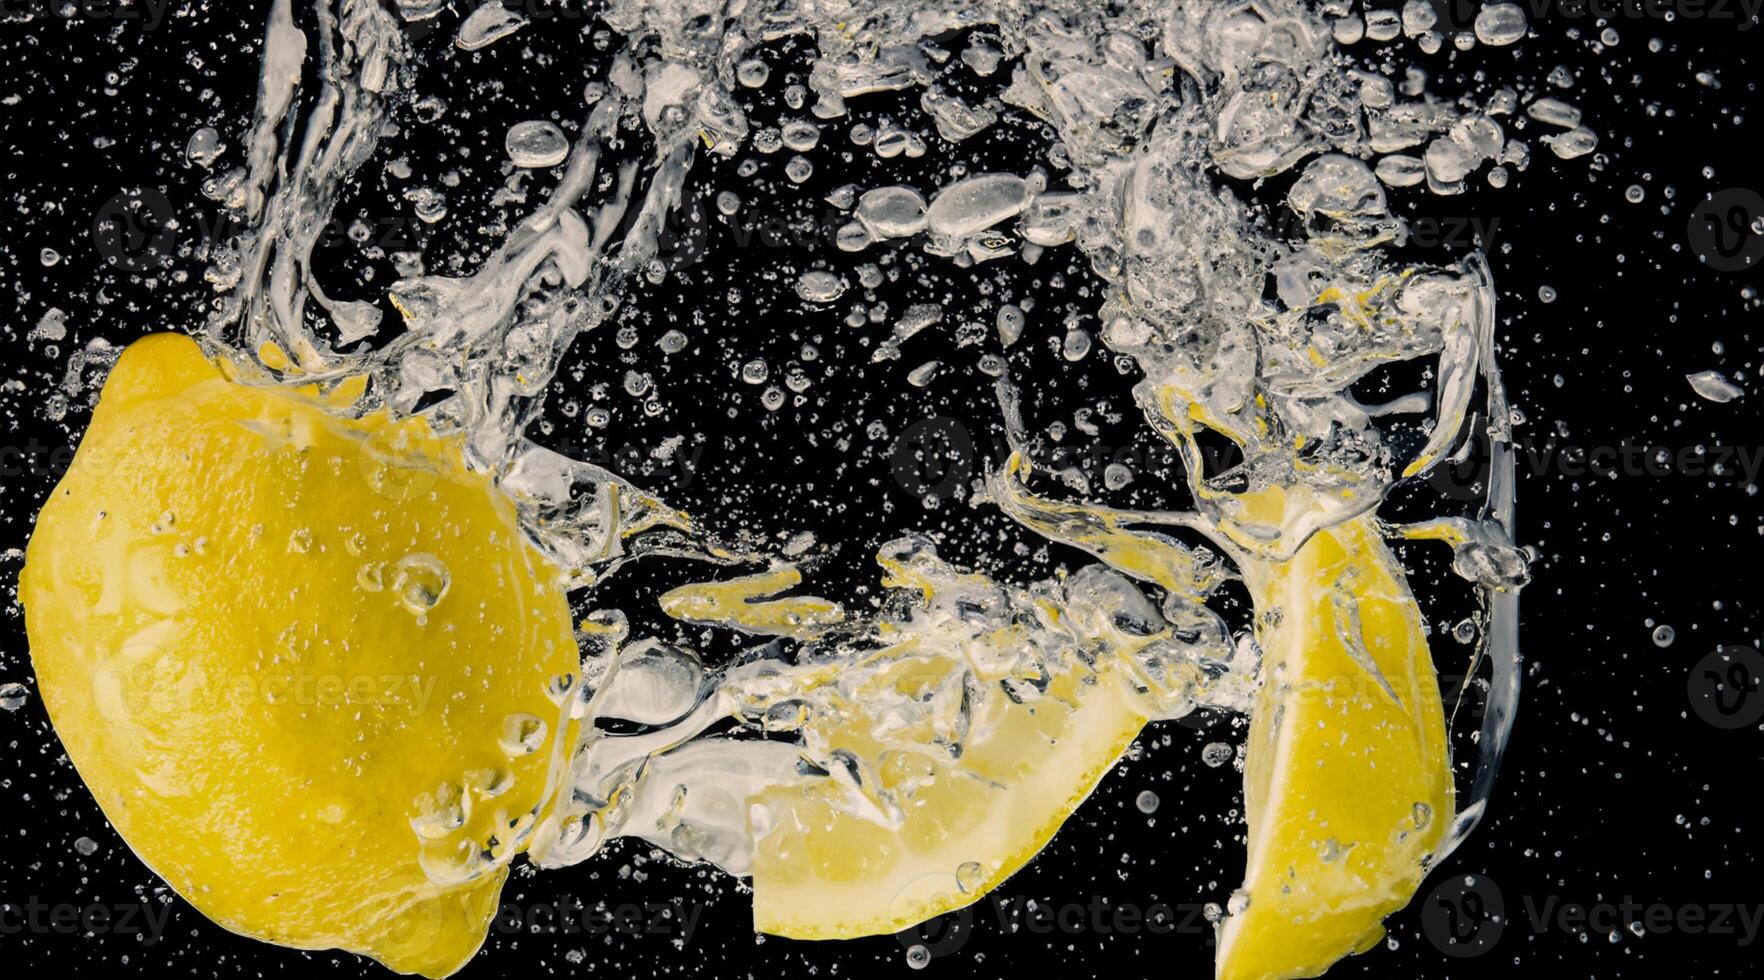 Underwater of freshly squeezed sweetened lemonade cold refreshing drink photo